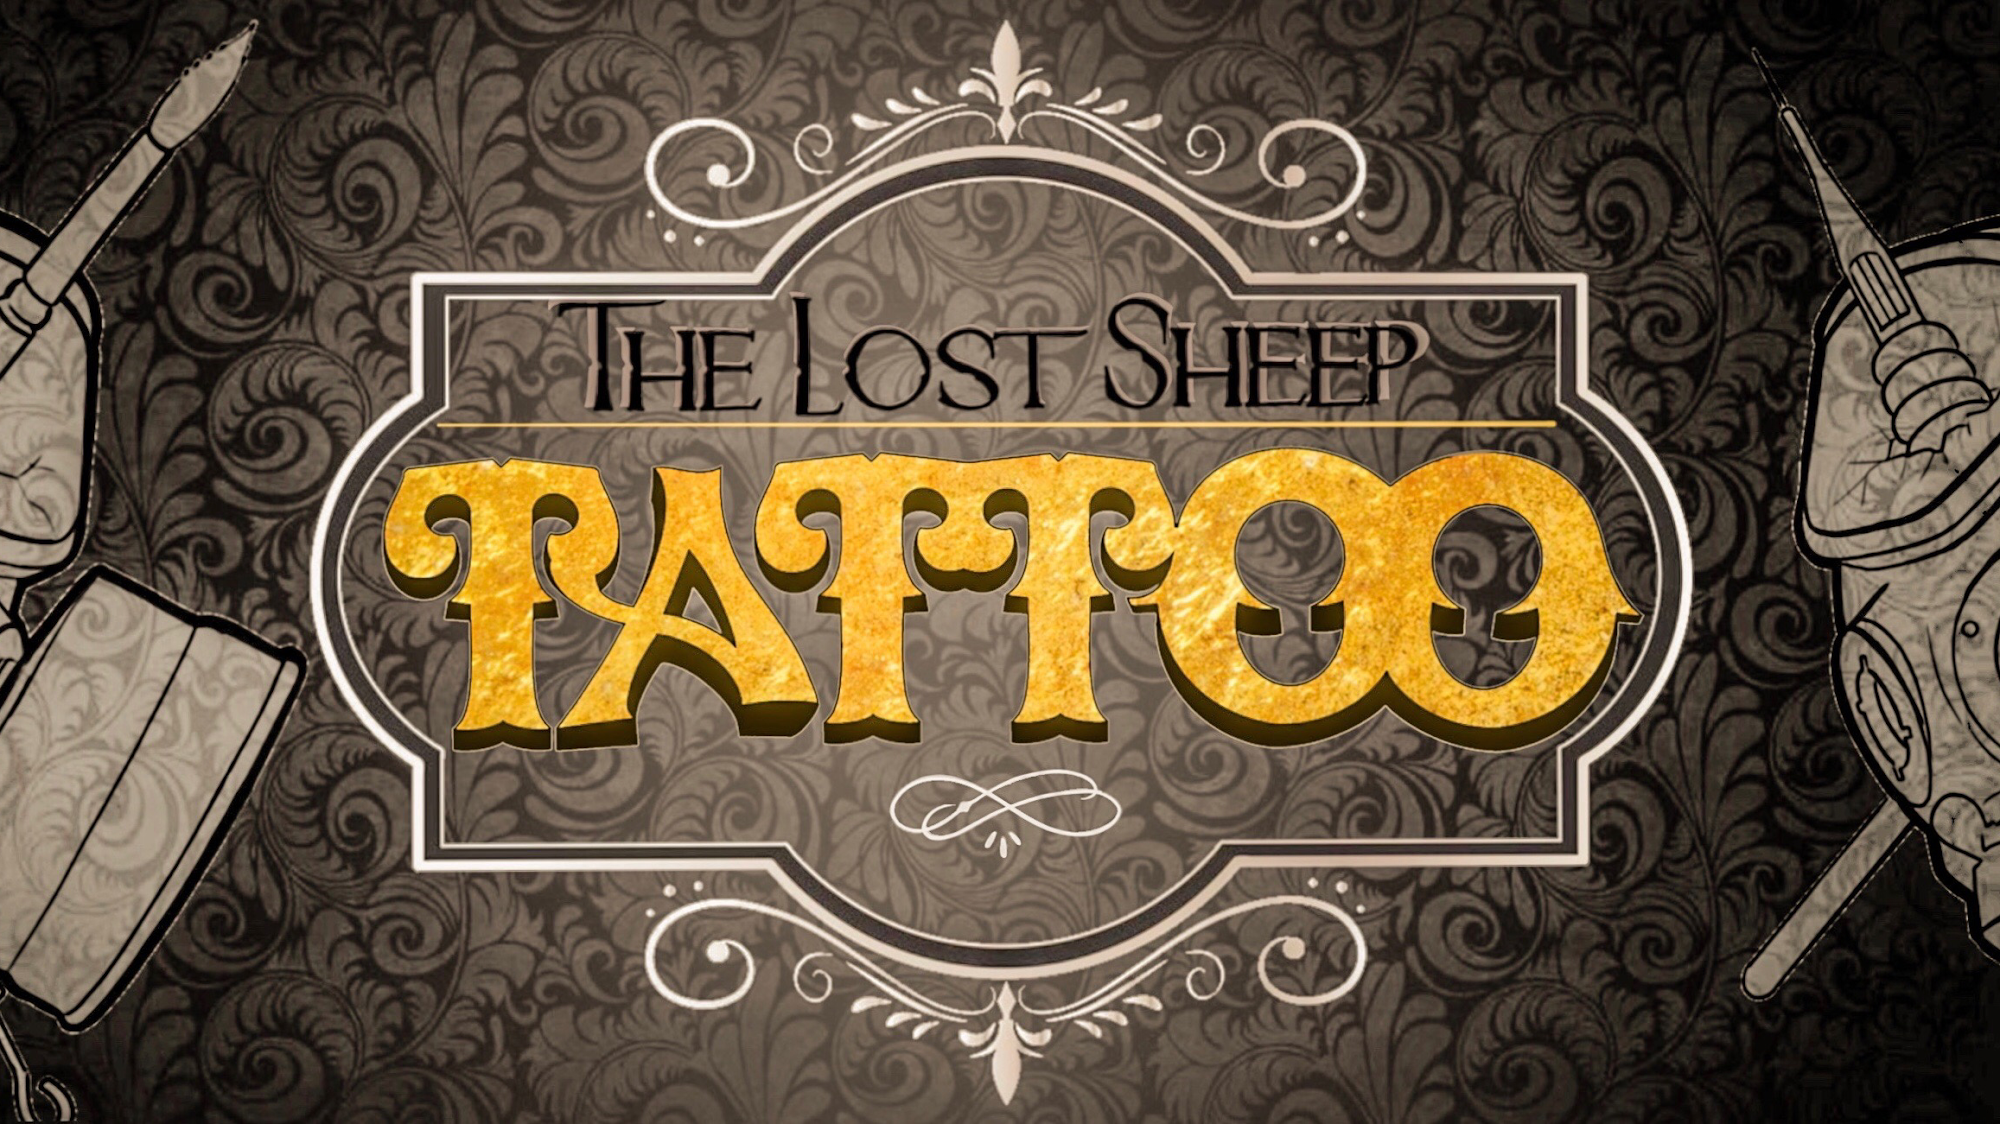 The Lost Sheep Tattoo